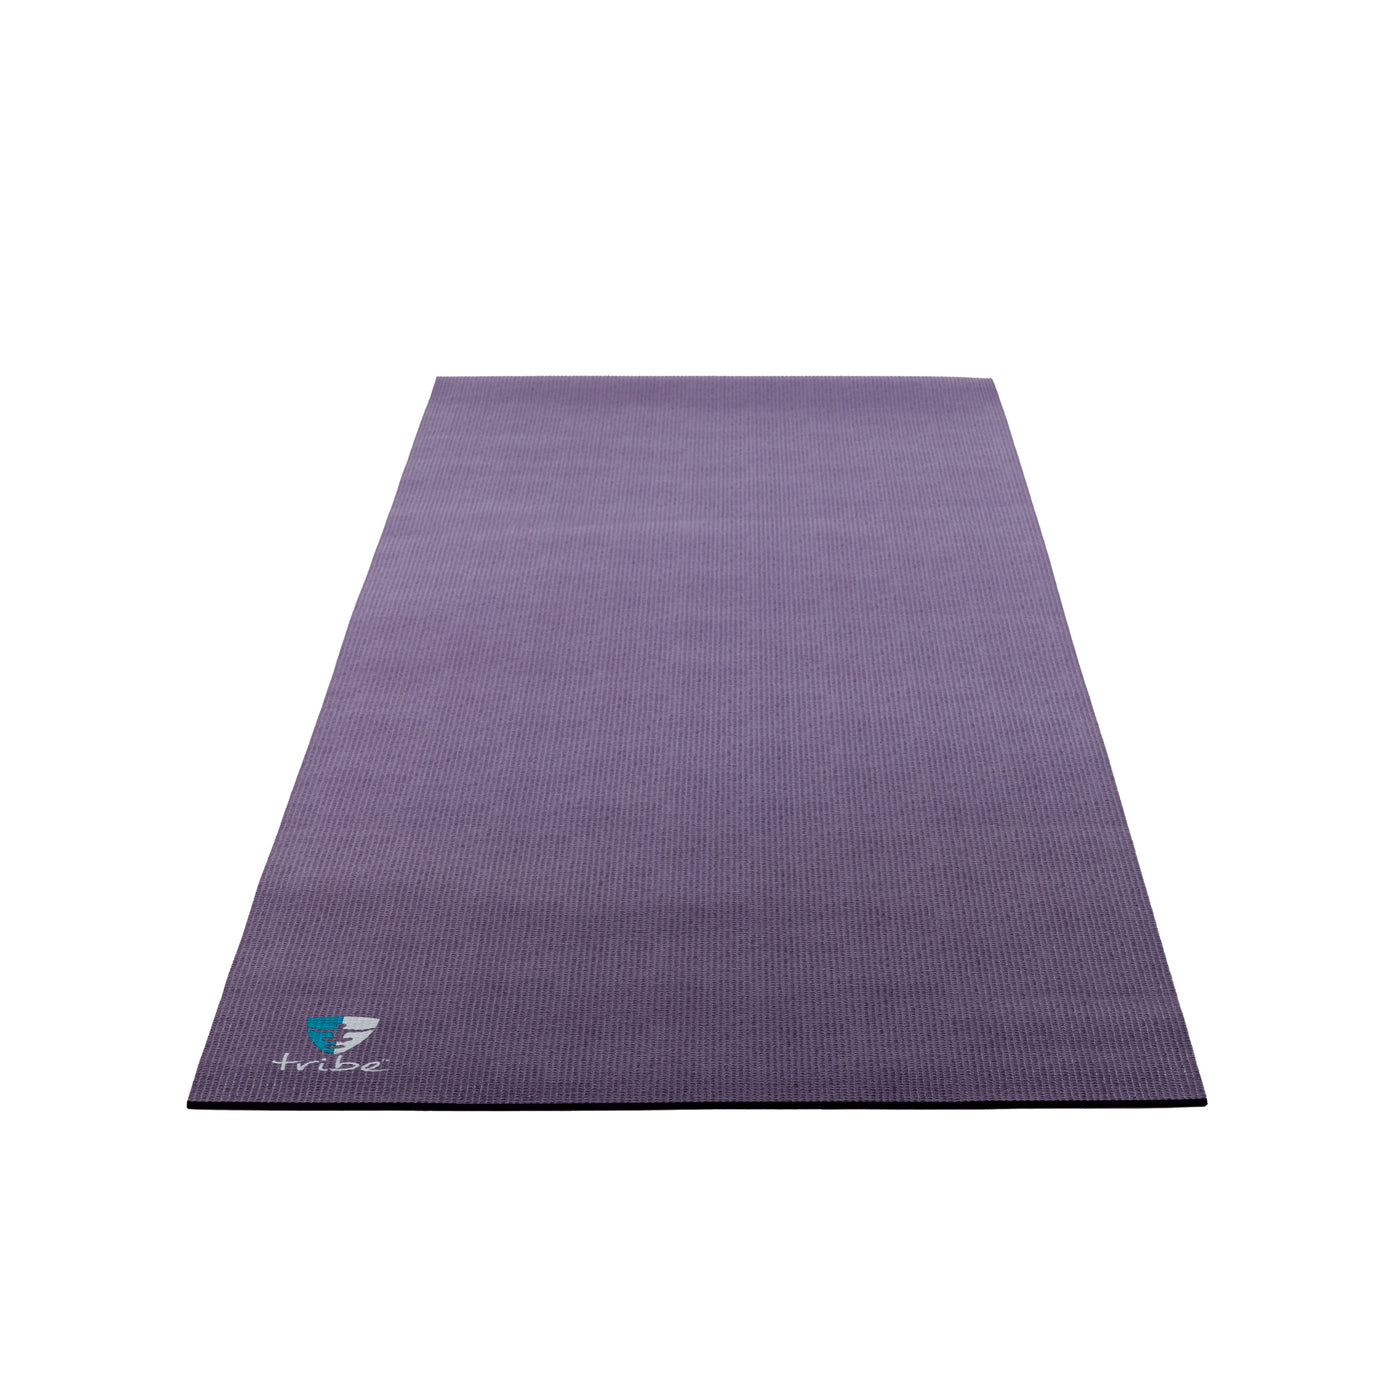 TRIBE ReGen 5mm Yoga Mat - Purple Sage - unfurled | Eco Yoga Store